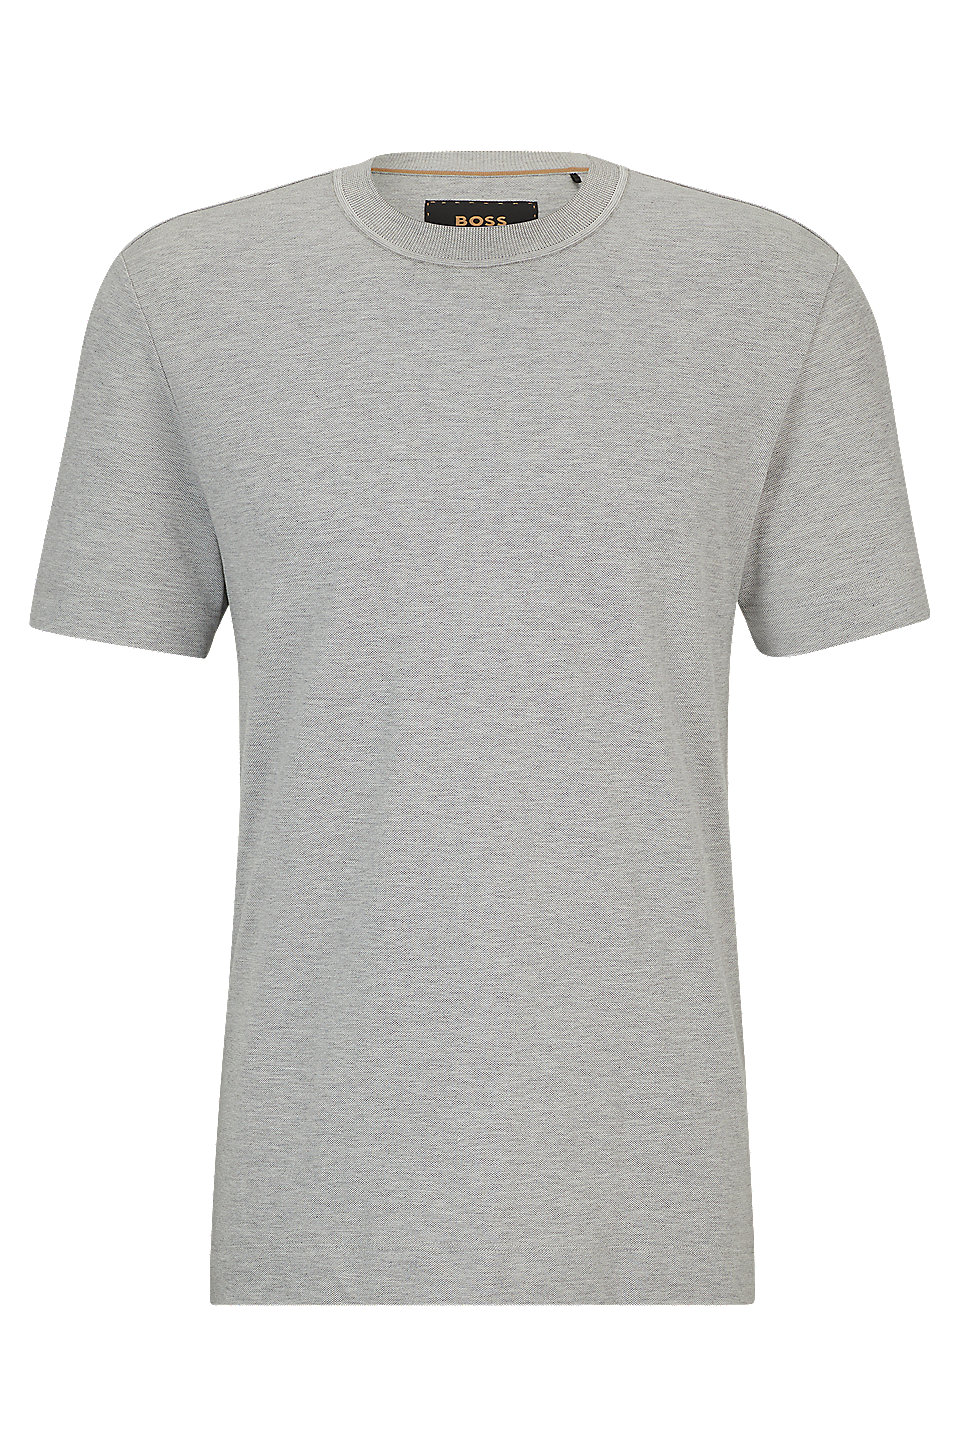 BOSS - Cotton-cashmere T-shirt with mercerized finish